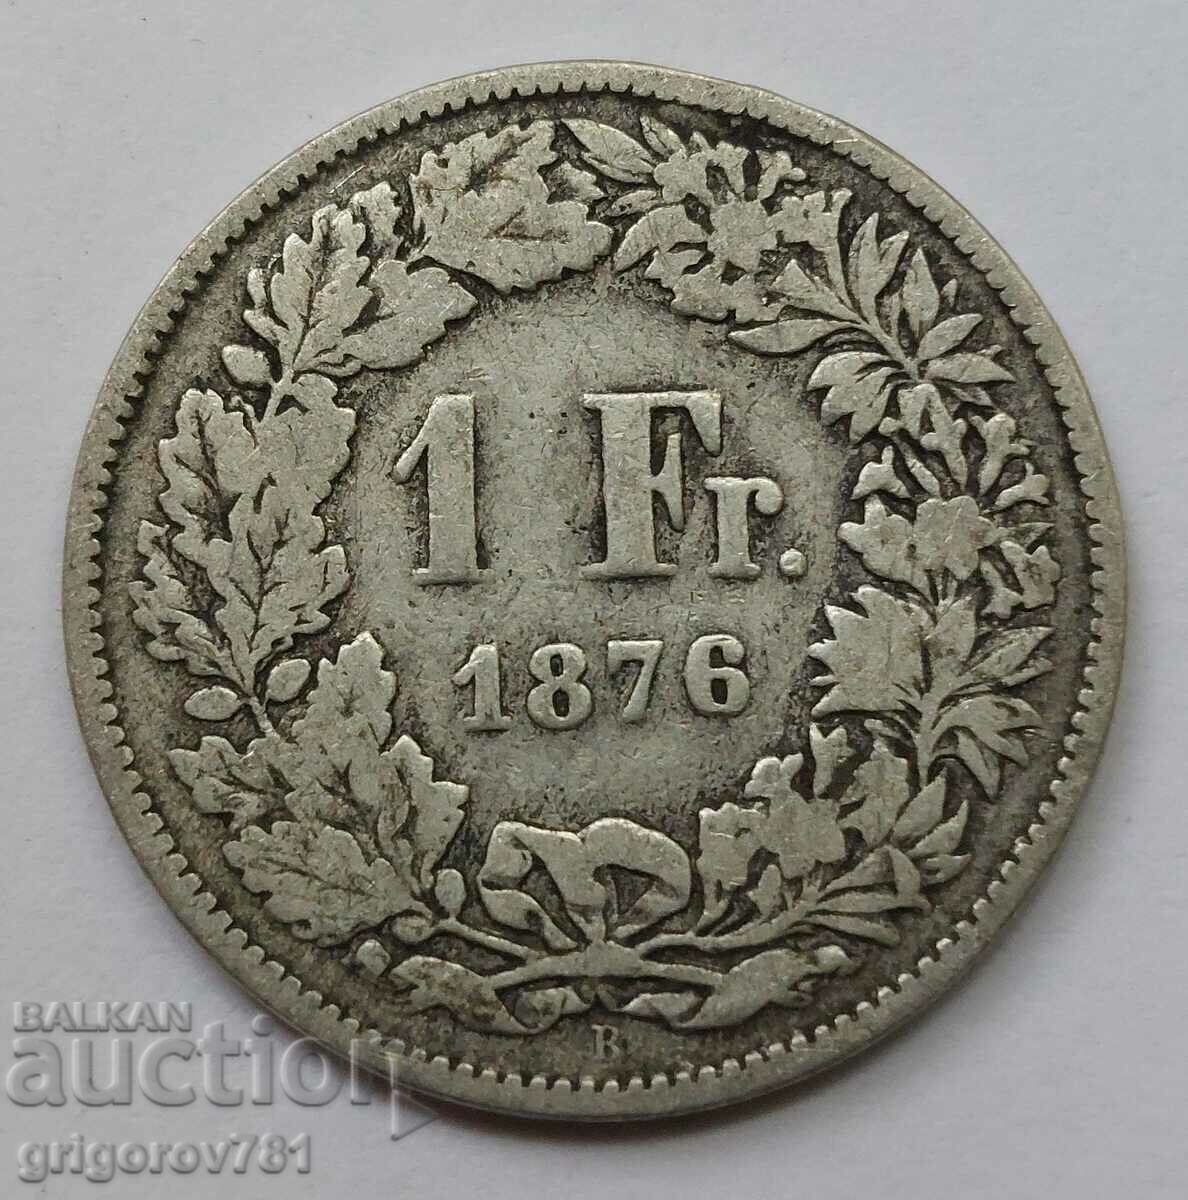 1 franc silver Switzerland 1876 B - silver coin